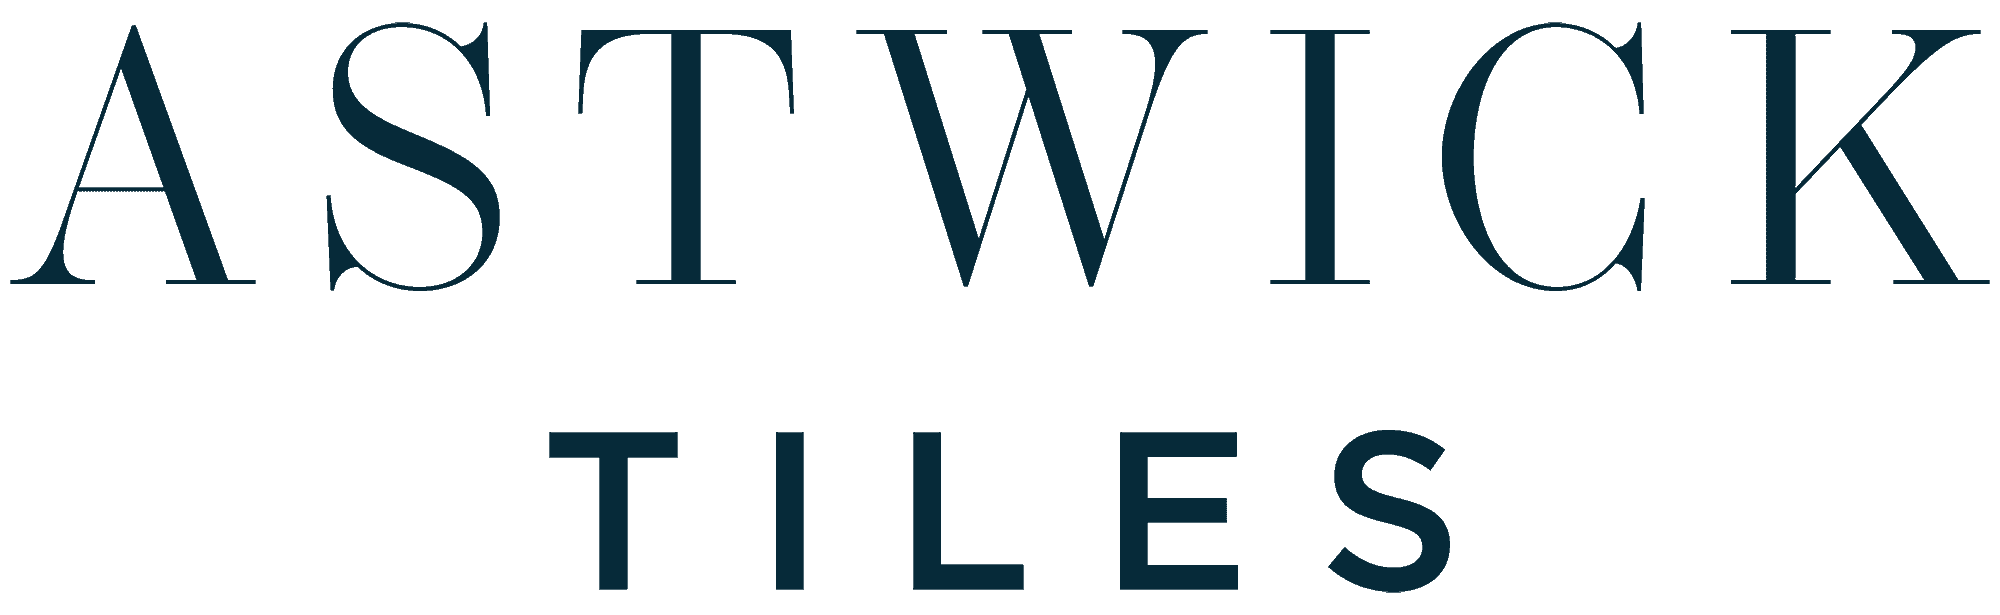 astwick tiles logo branding